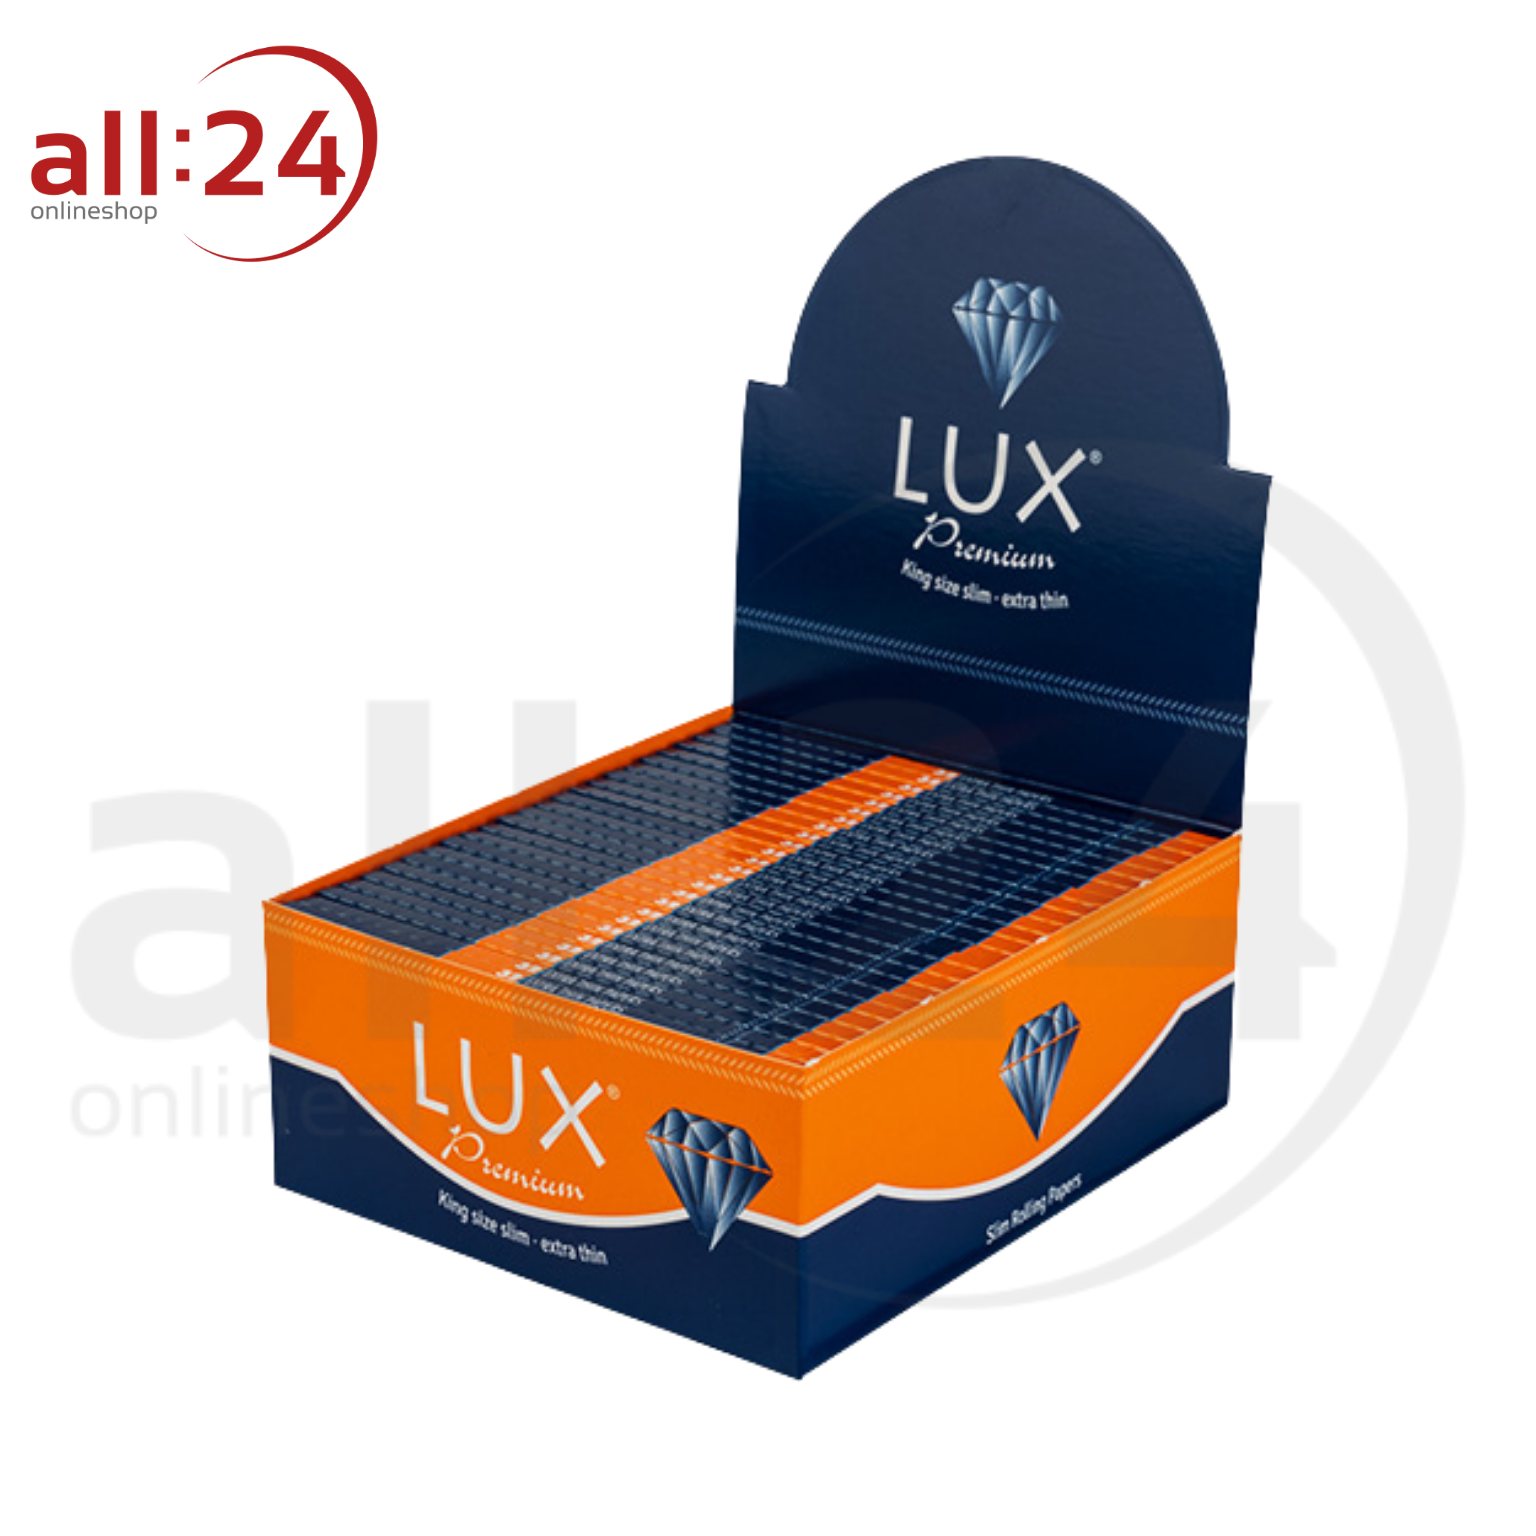 Lux Premium King Size Slim Paper 32 Blatt, 22-er Box 